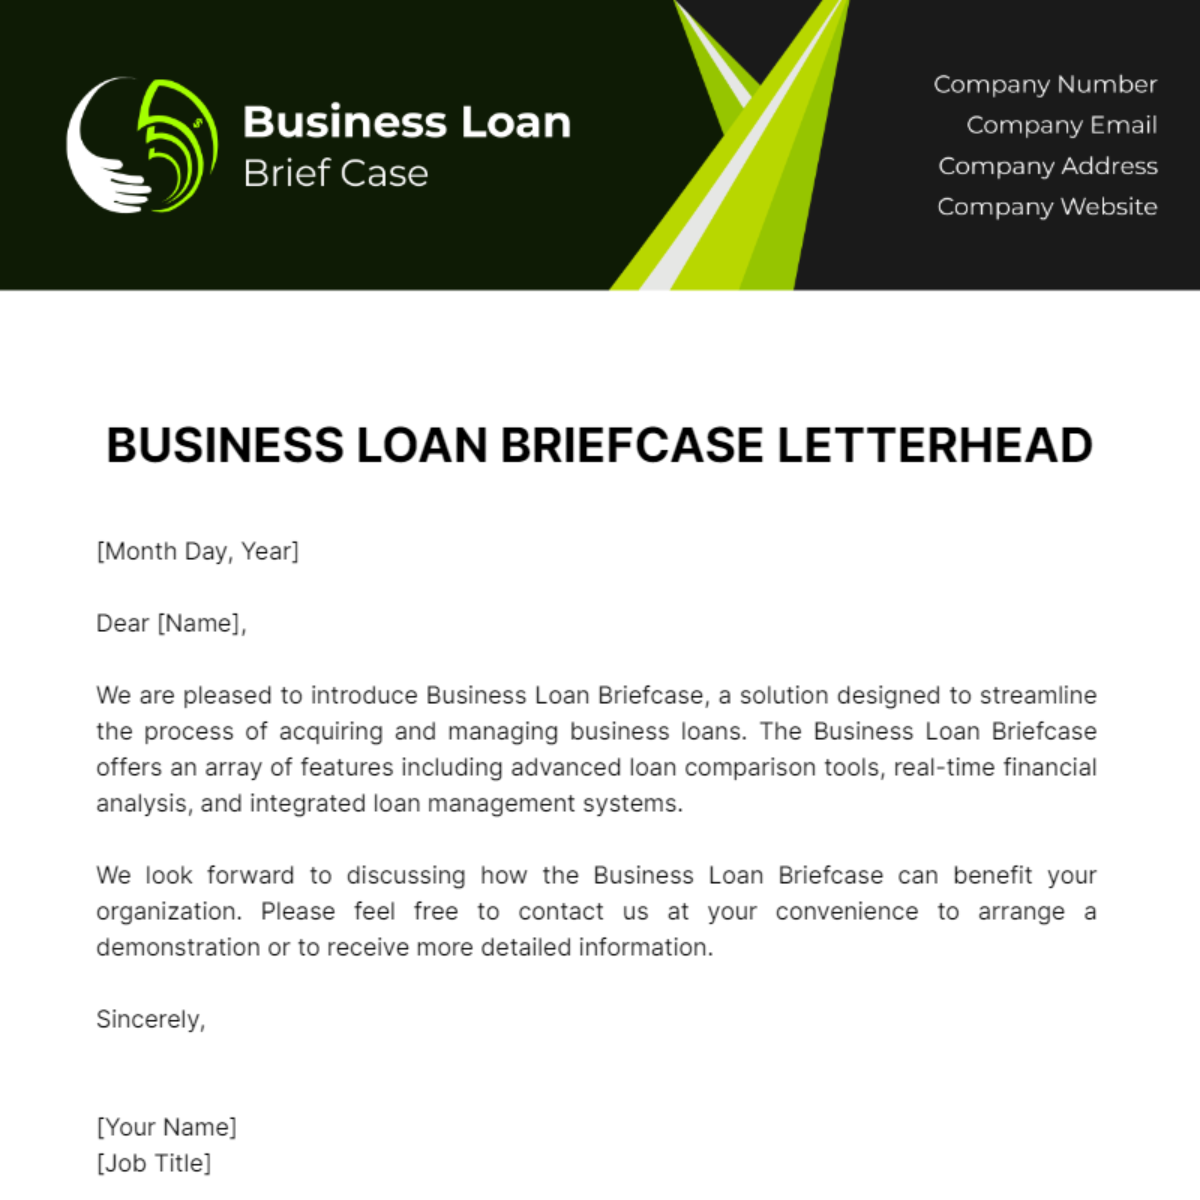 Business Loan Briefcase Letterhead Template